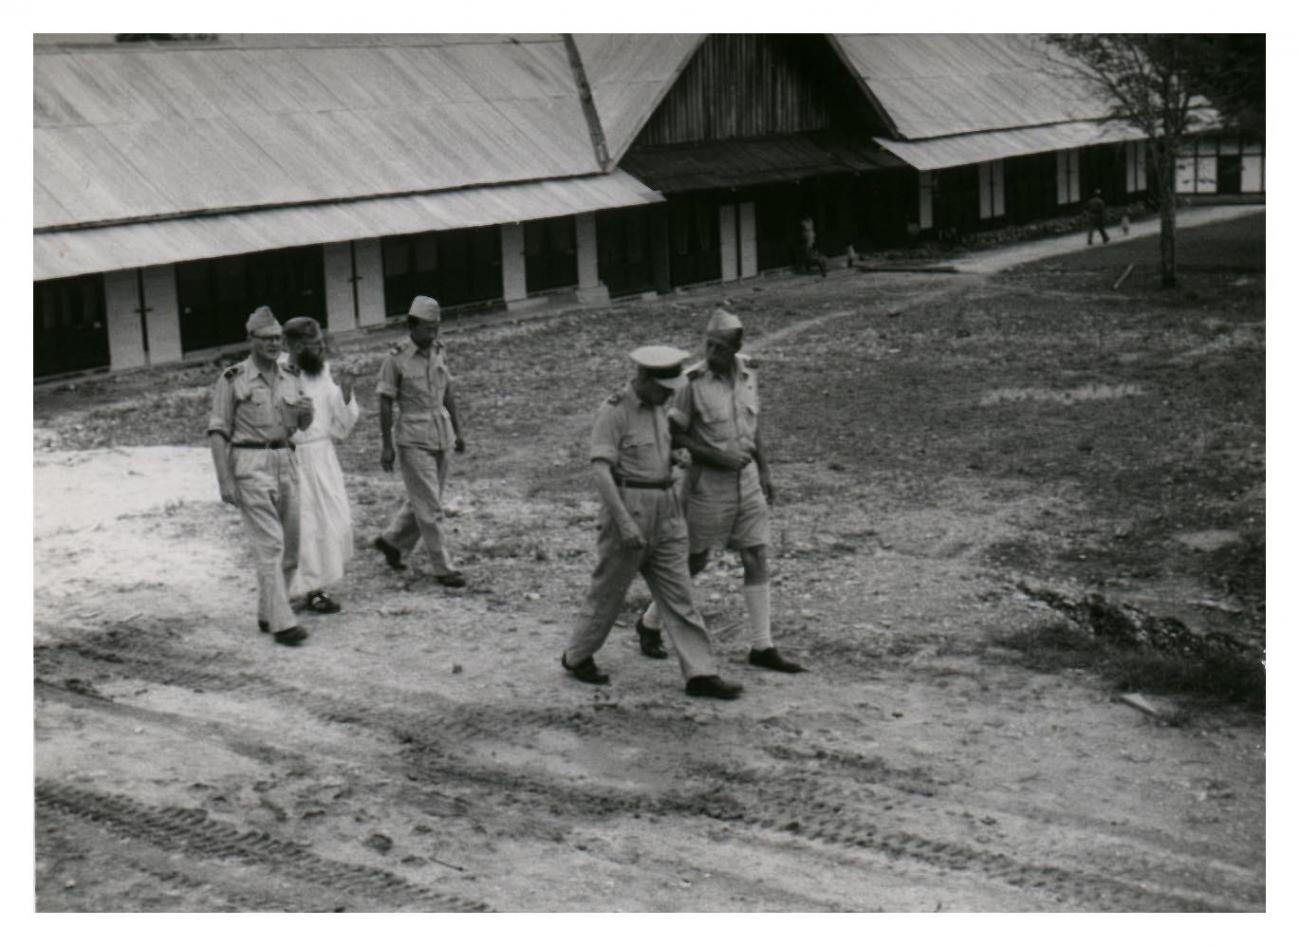 BD/54/22 - 
Kampong Manokwari, o.m. Aalmoezenier Stokman
